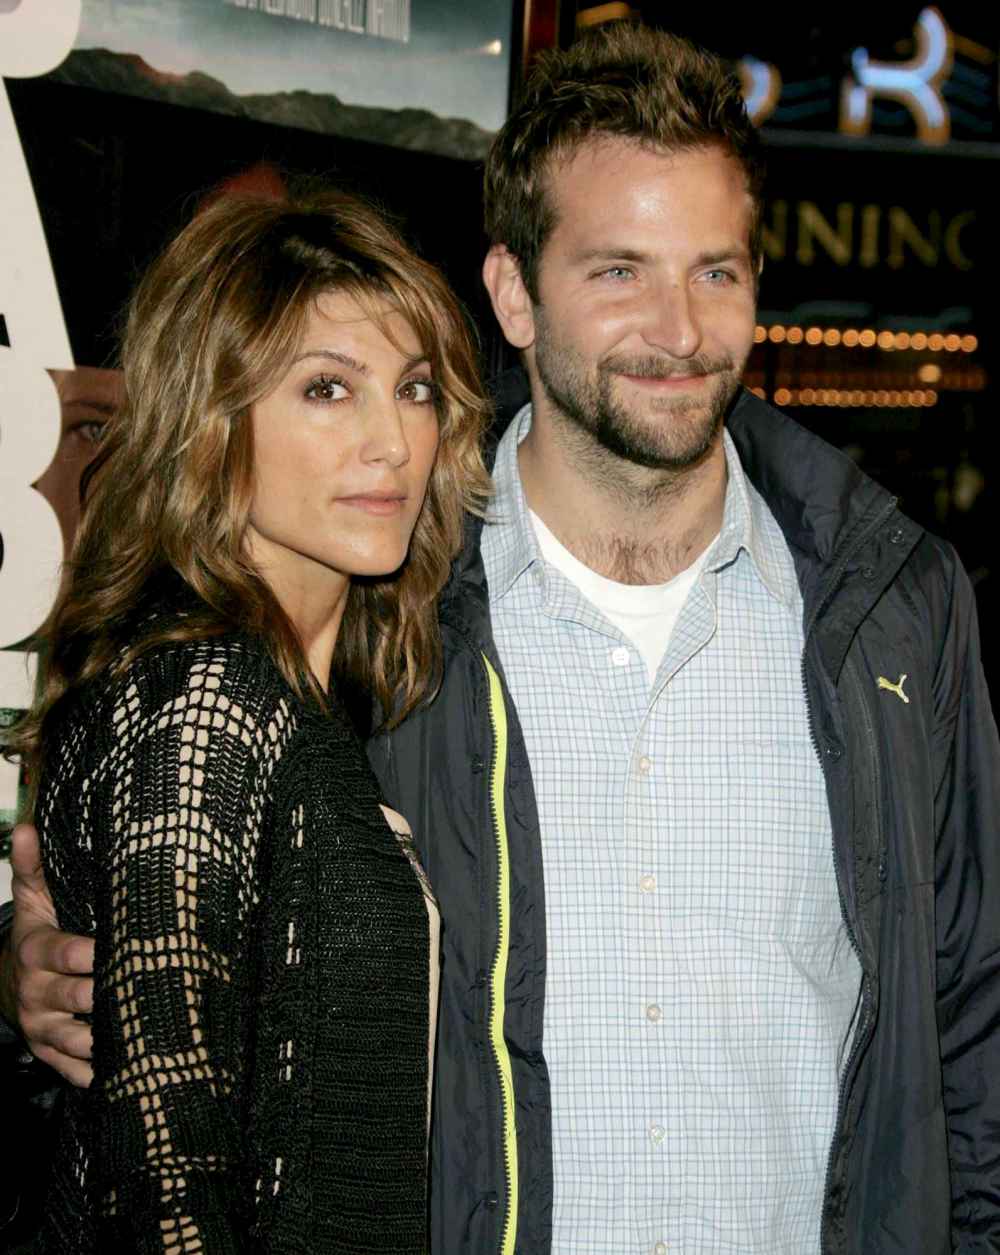 Jennifer Esposito Slams Ex-Husband Bradley Cooper as "Master Manipulator" in Thinly Veiled Jennifer's Way Book References 2006